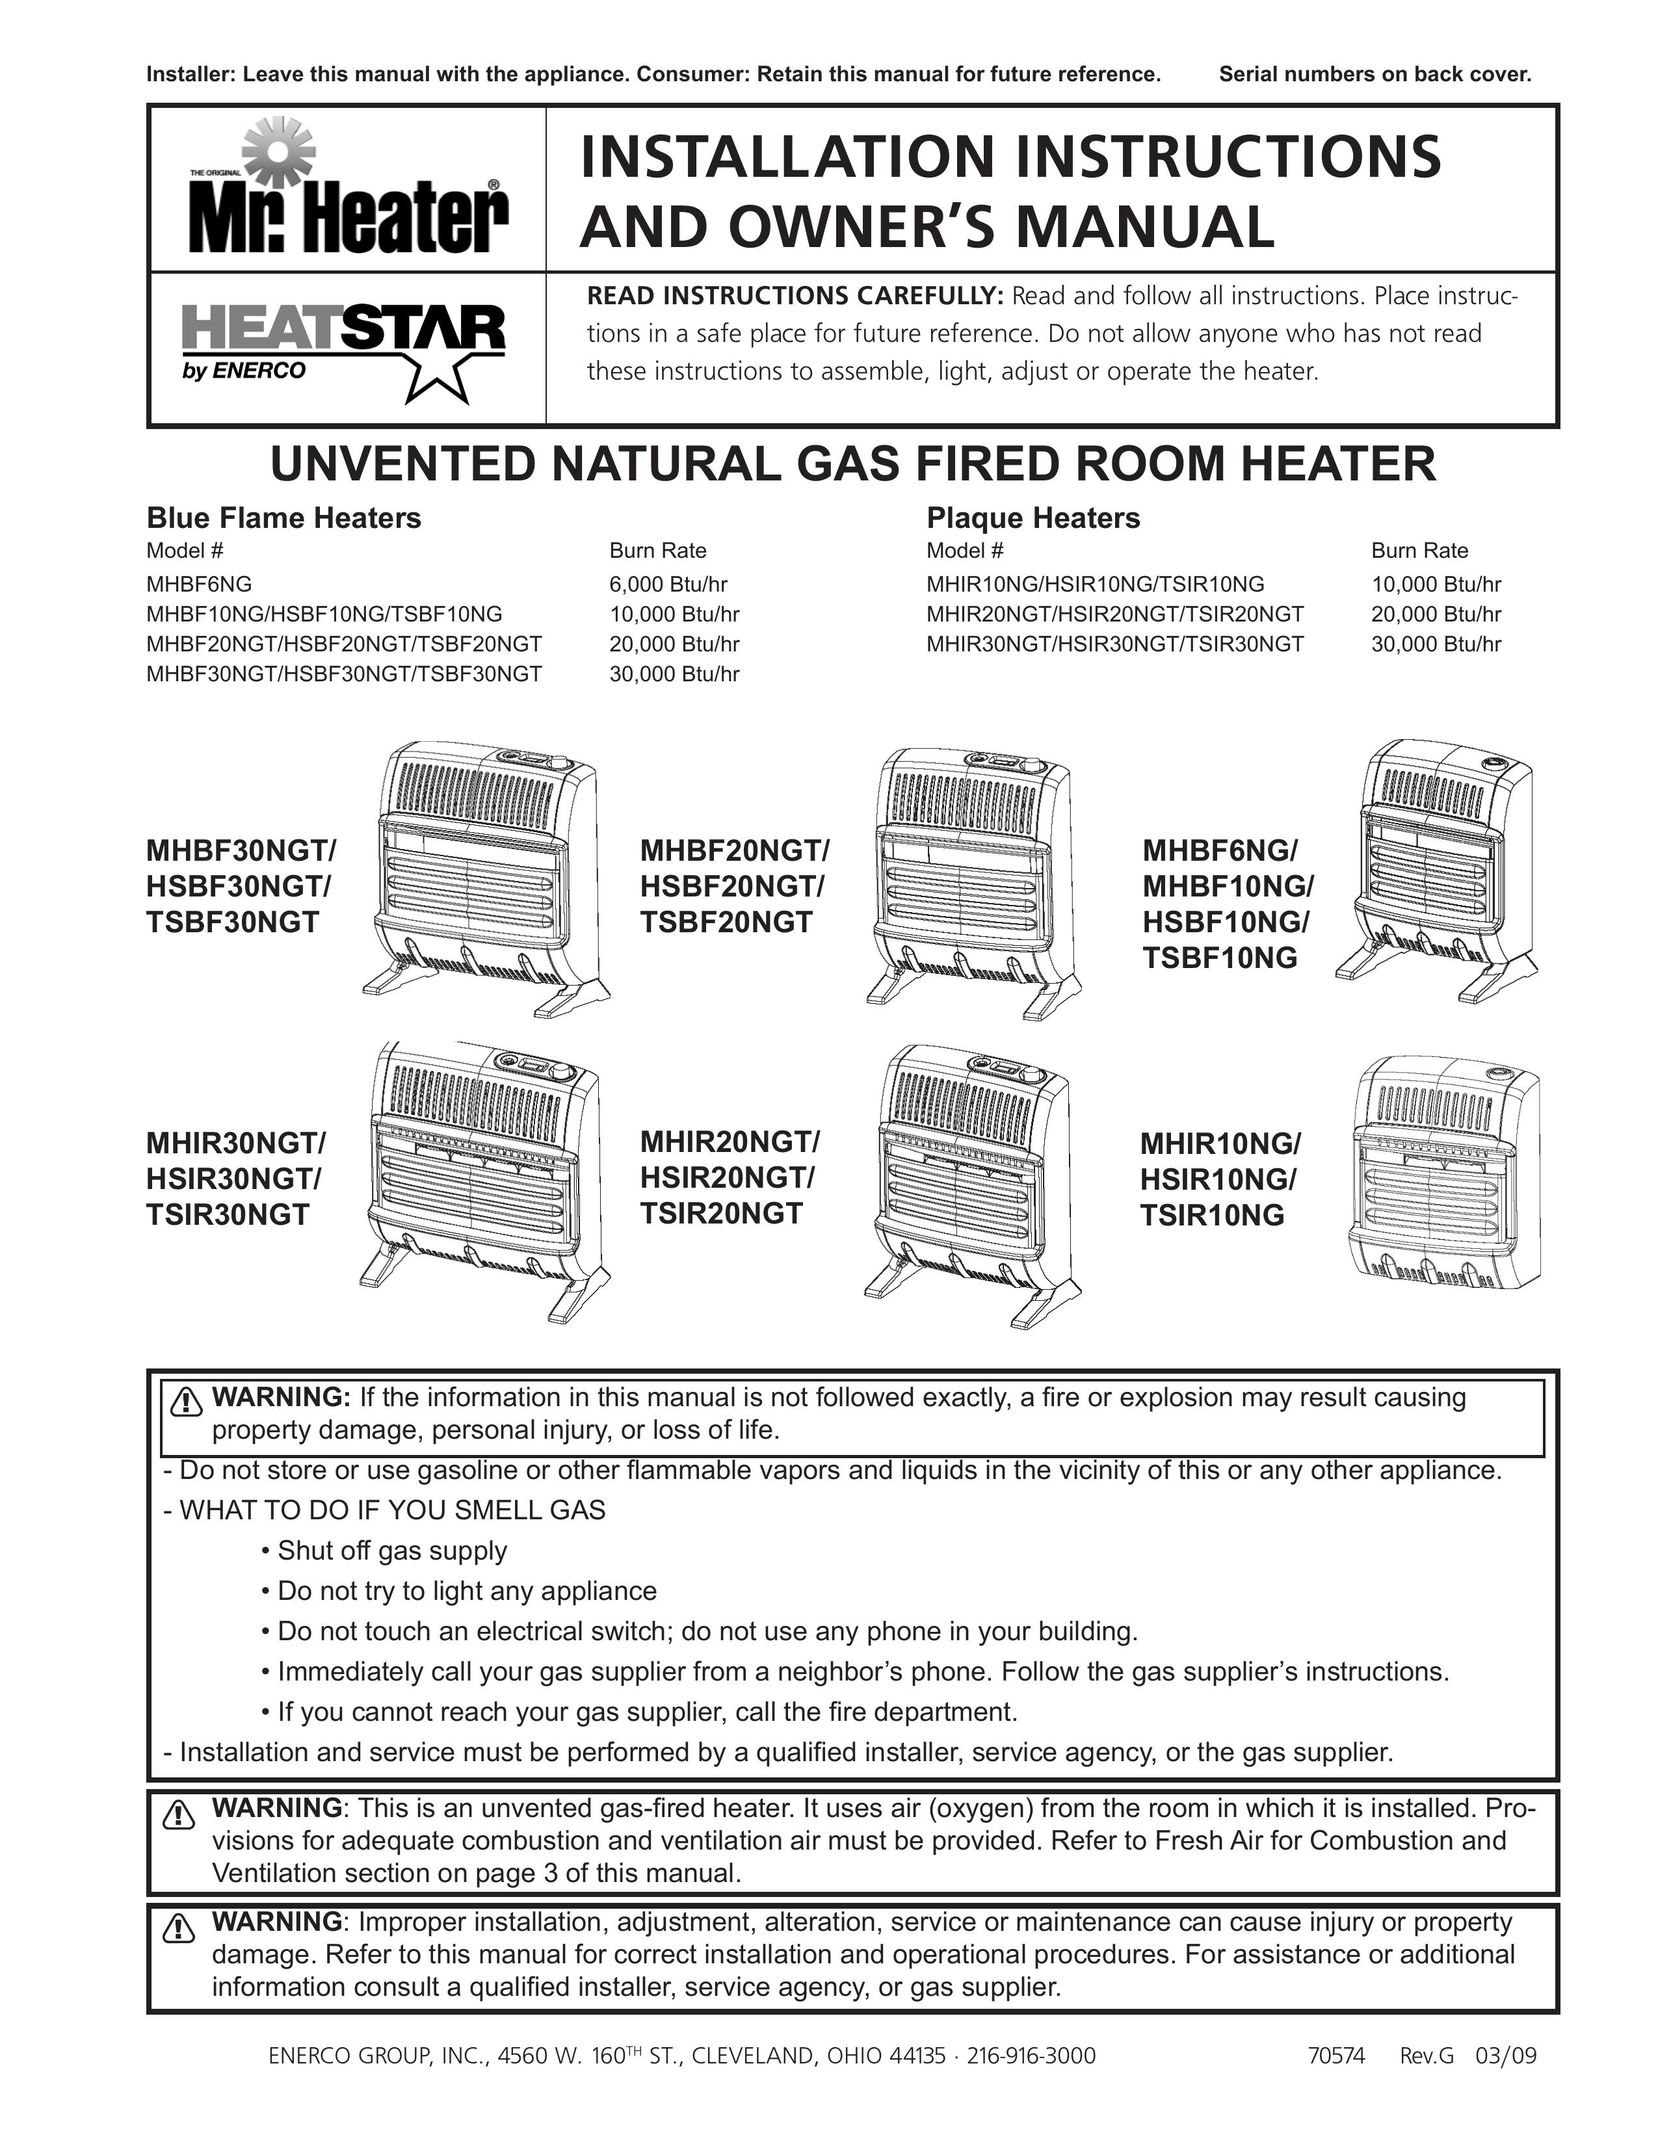 Enerco HSIR10NG Gas Heater User Manual